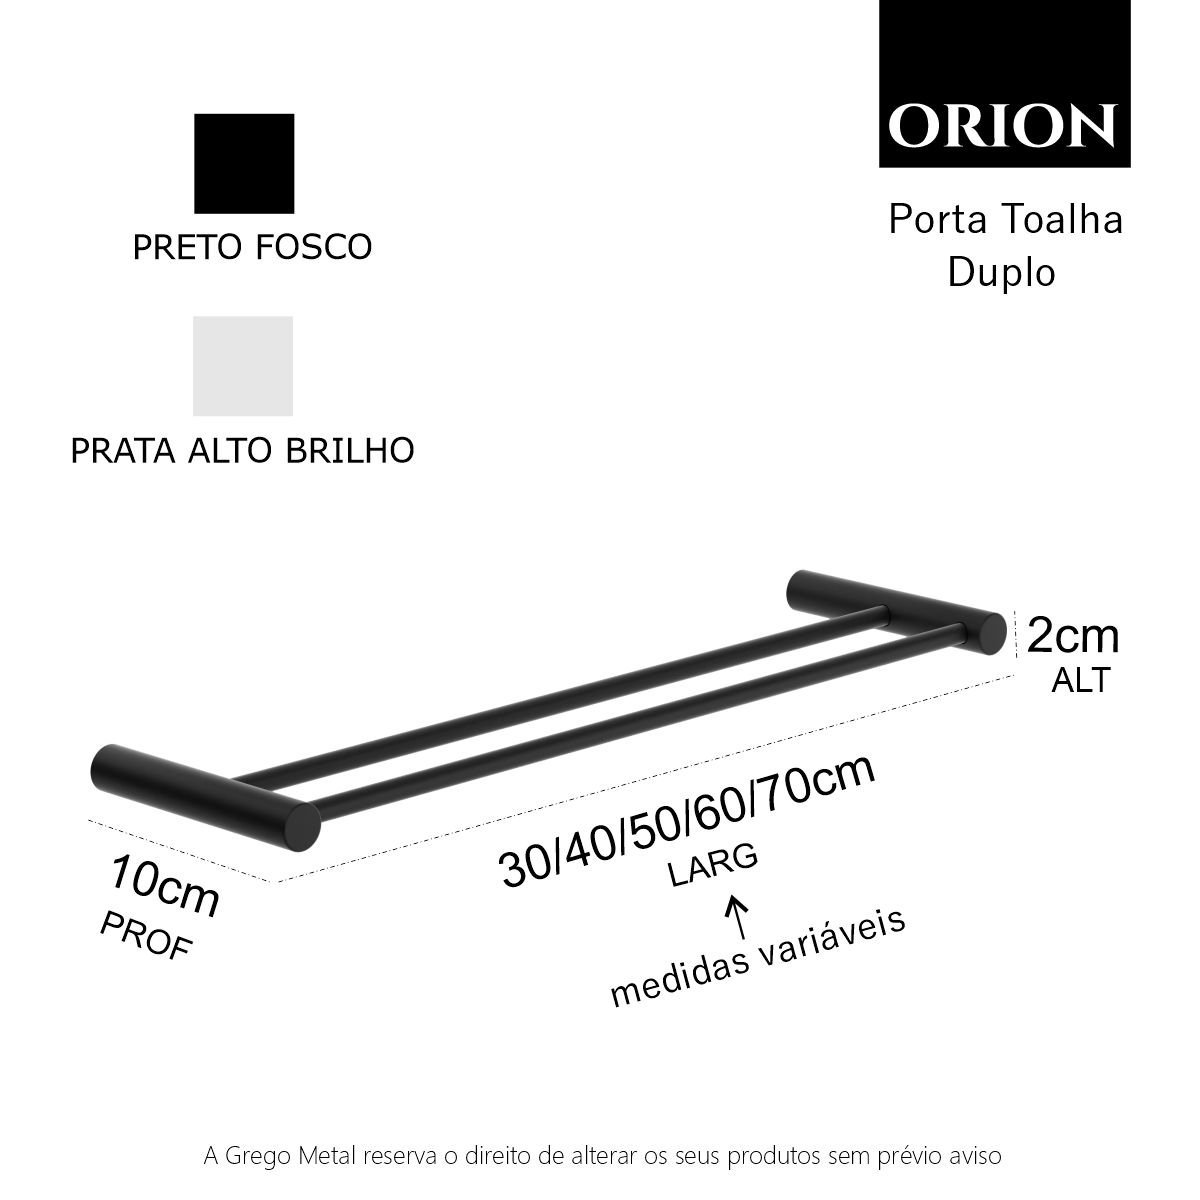 Porta Toalha Duplo para Banheiro Toalheiro Suporte Redondo Barra Grego Metal Preto Fosco Orion - 5